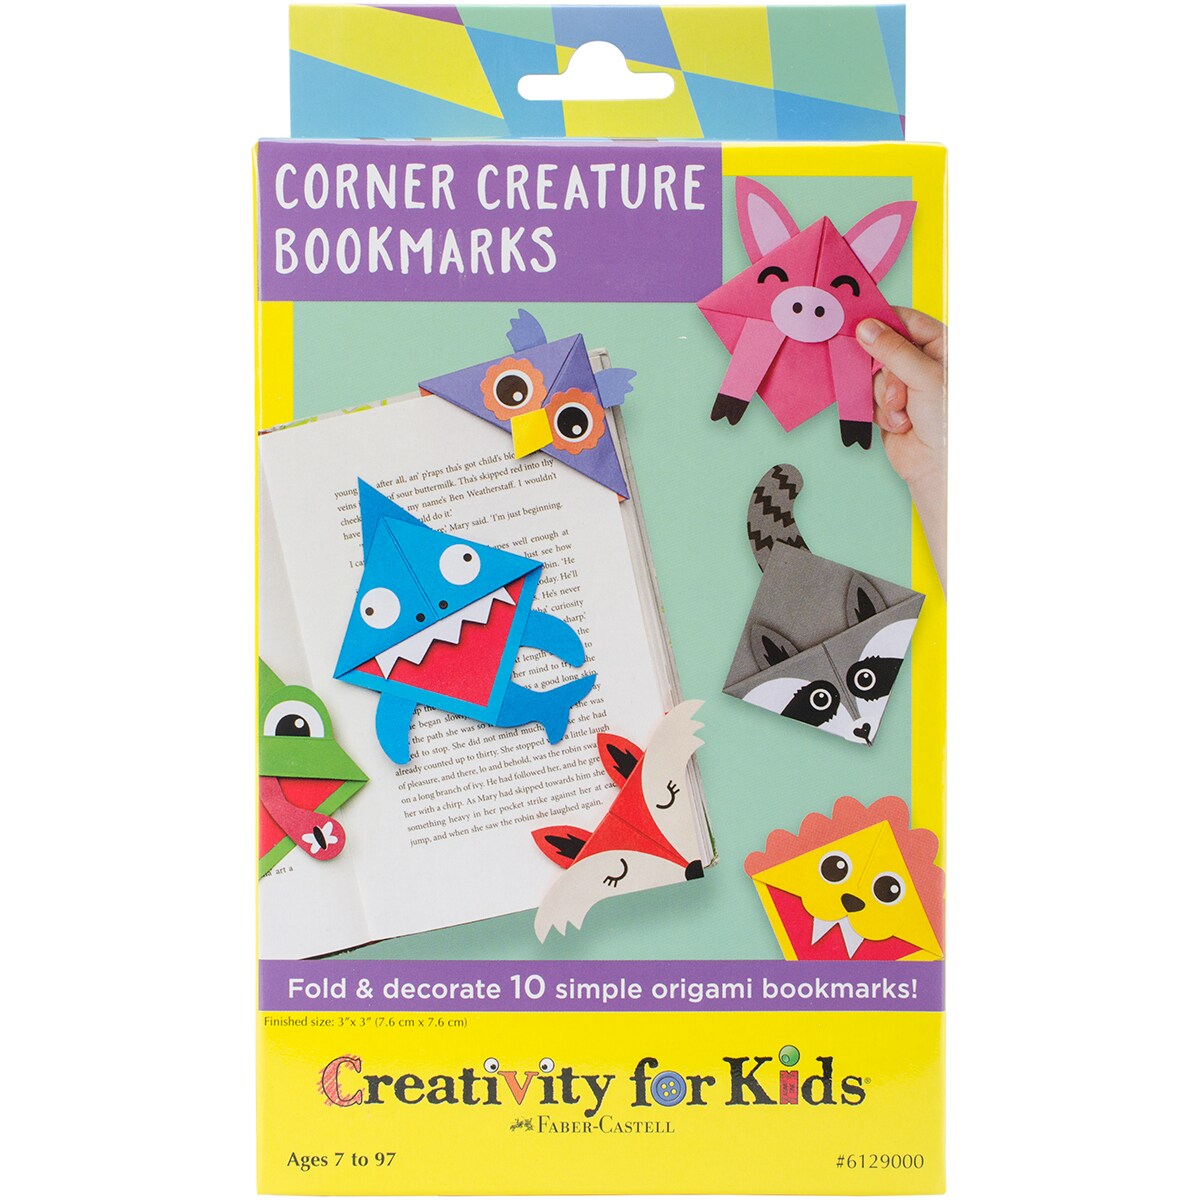 Corner Creature Bookmarks Mini Kit - Creativity for Kids – The Red